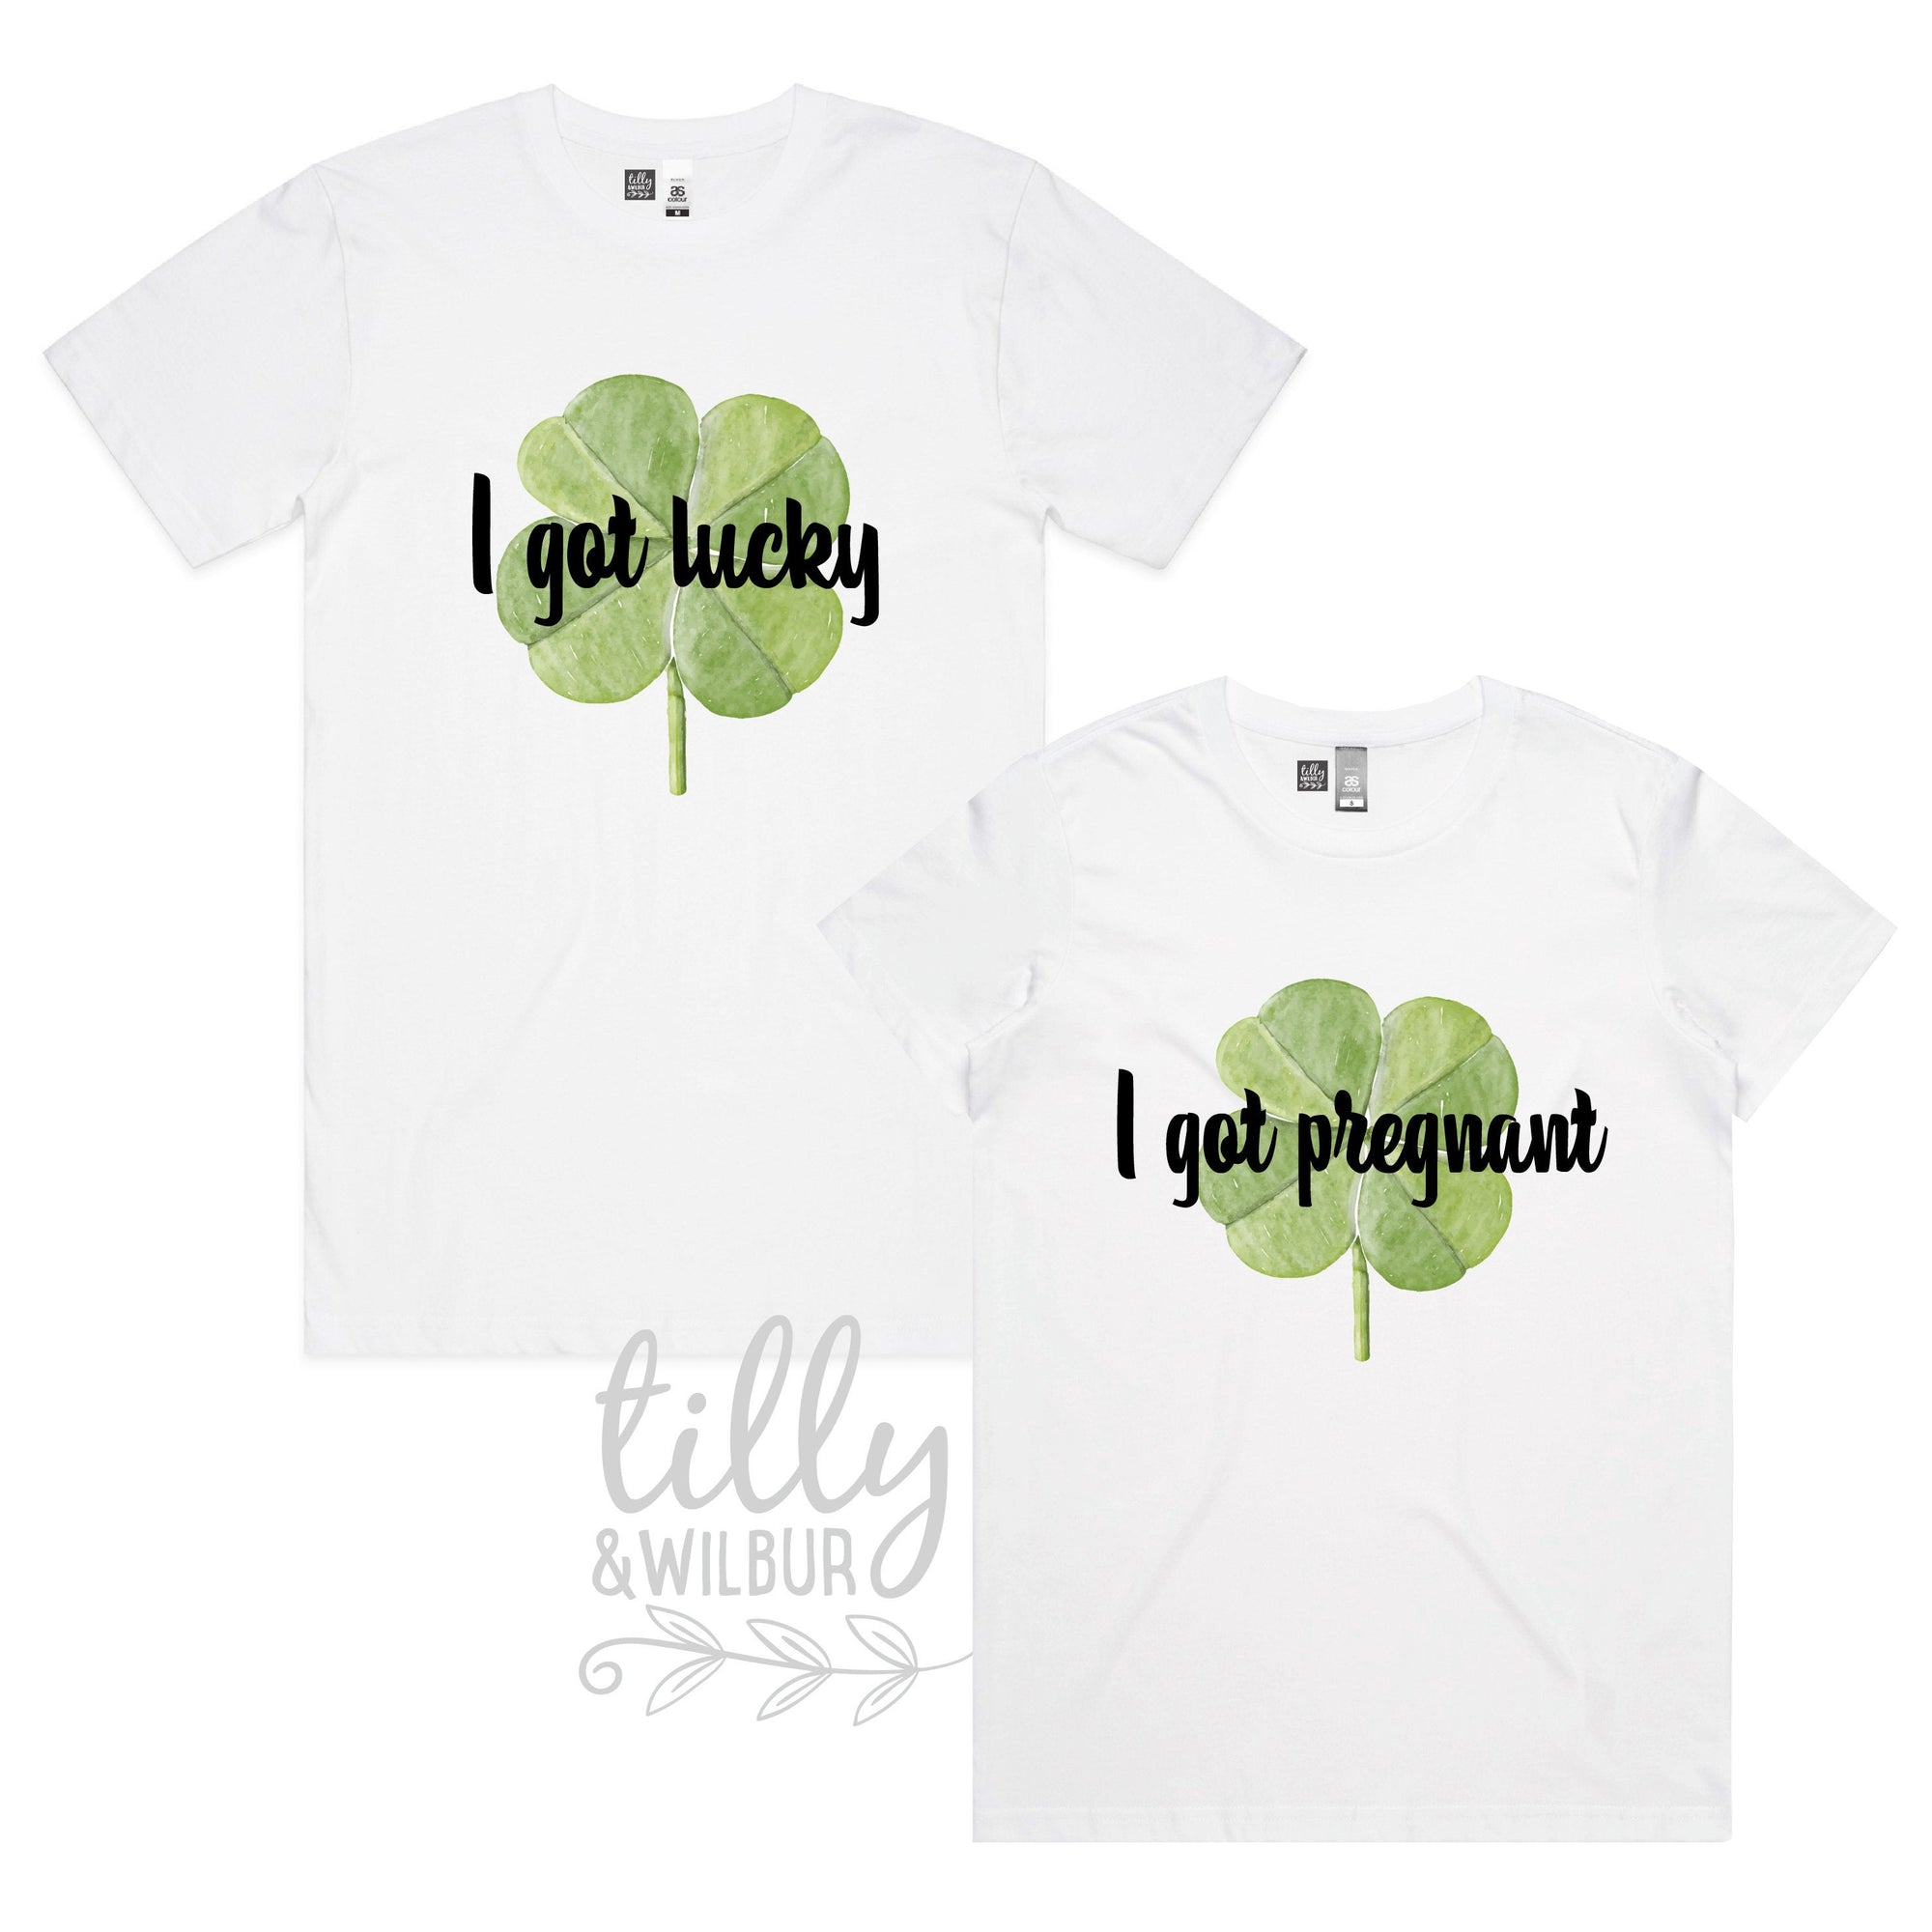 I Got Lucky, I Got Pregnant Matching Announcement T-Shirts, Pregnancy Announcement T-Shirts For New Parents, St Patrick&#39;s Day Shenanigans